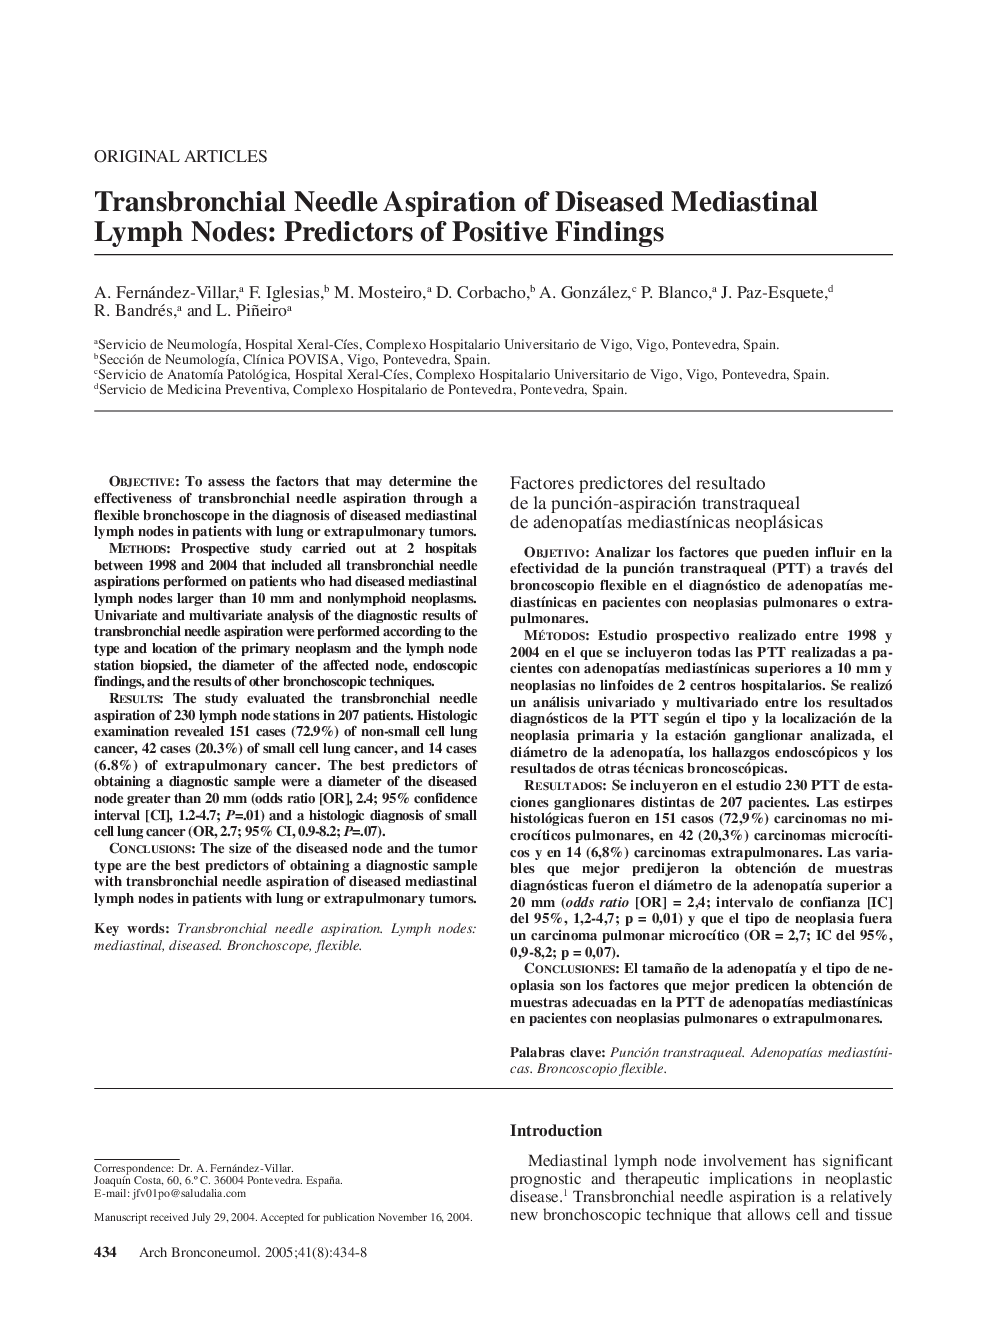 Transbronchial Needle Aspiration of Diseased Mediastinal Lymph Nodes: Predictors of Positive Findings